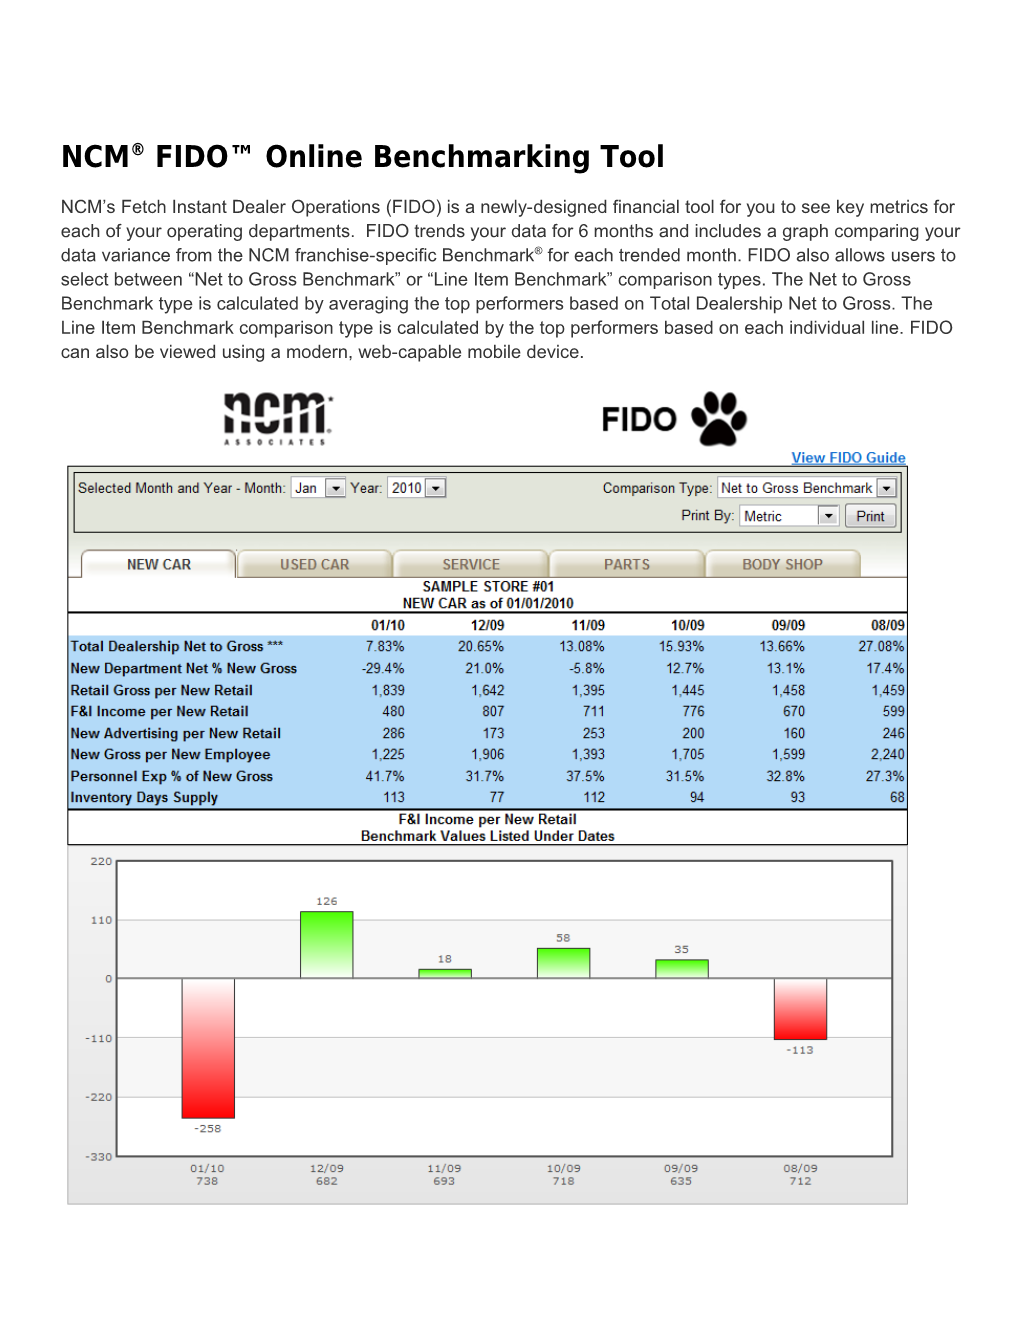 NCM FIDO Online Benchmarking Tool